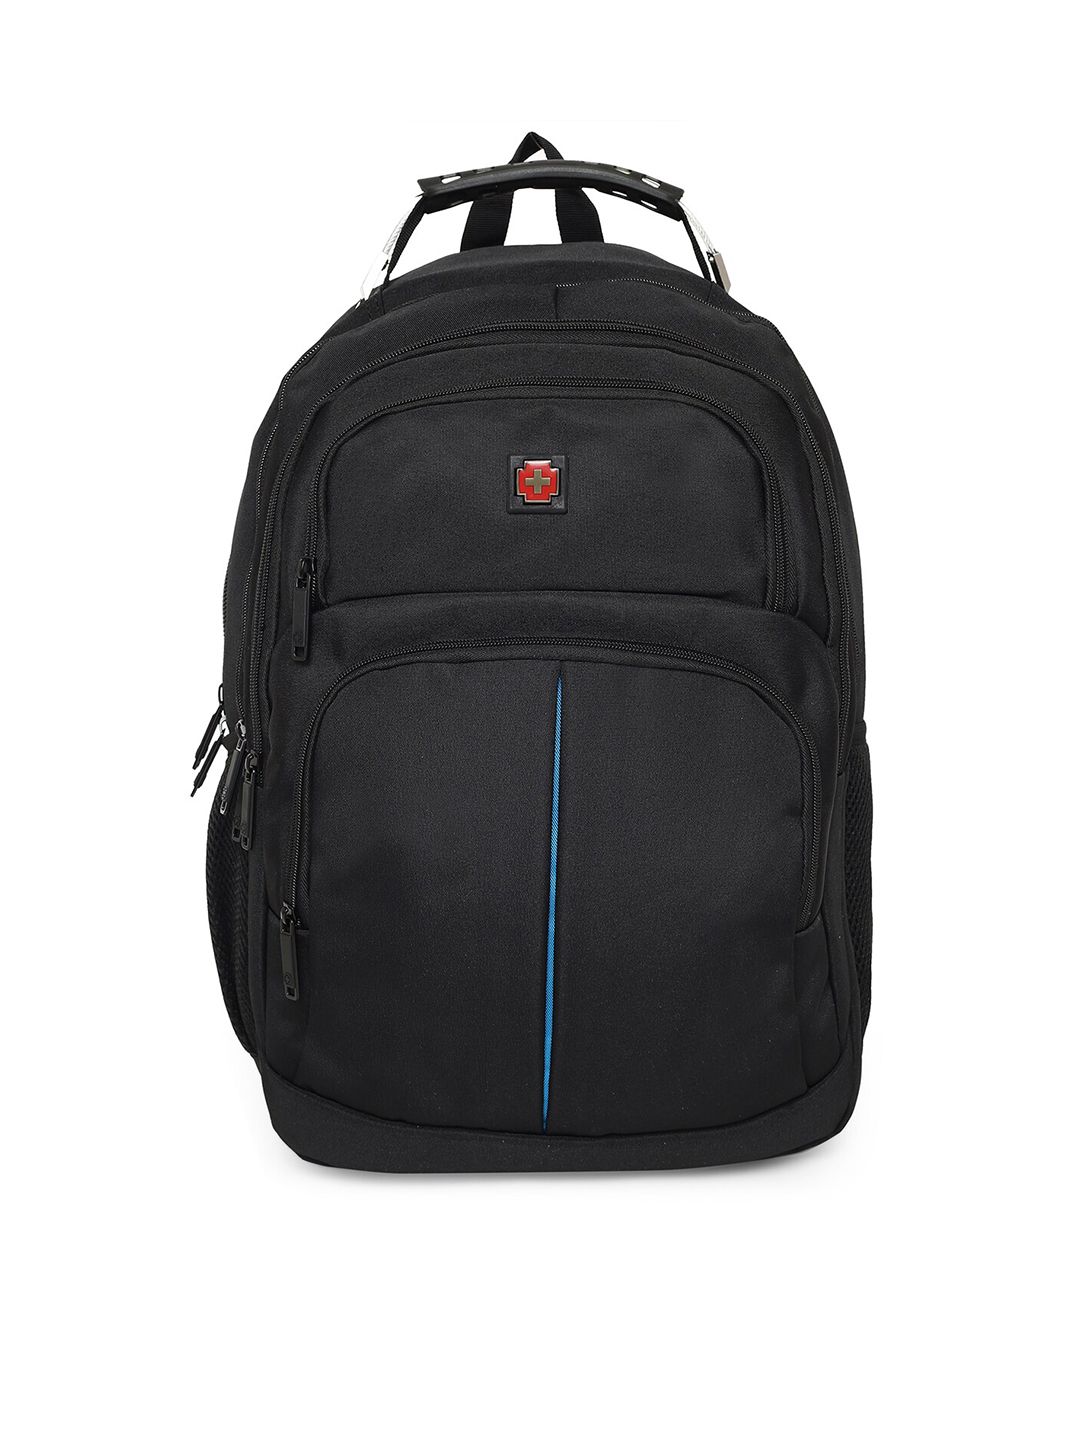 SWISS BRAND Unisex Black Backpack Price in India